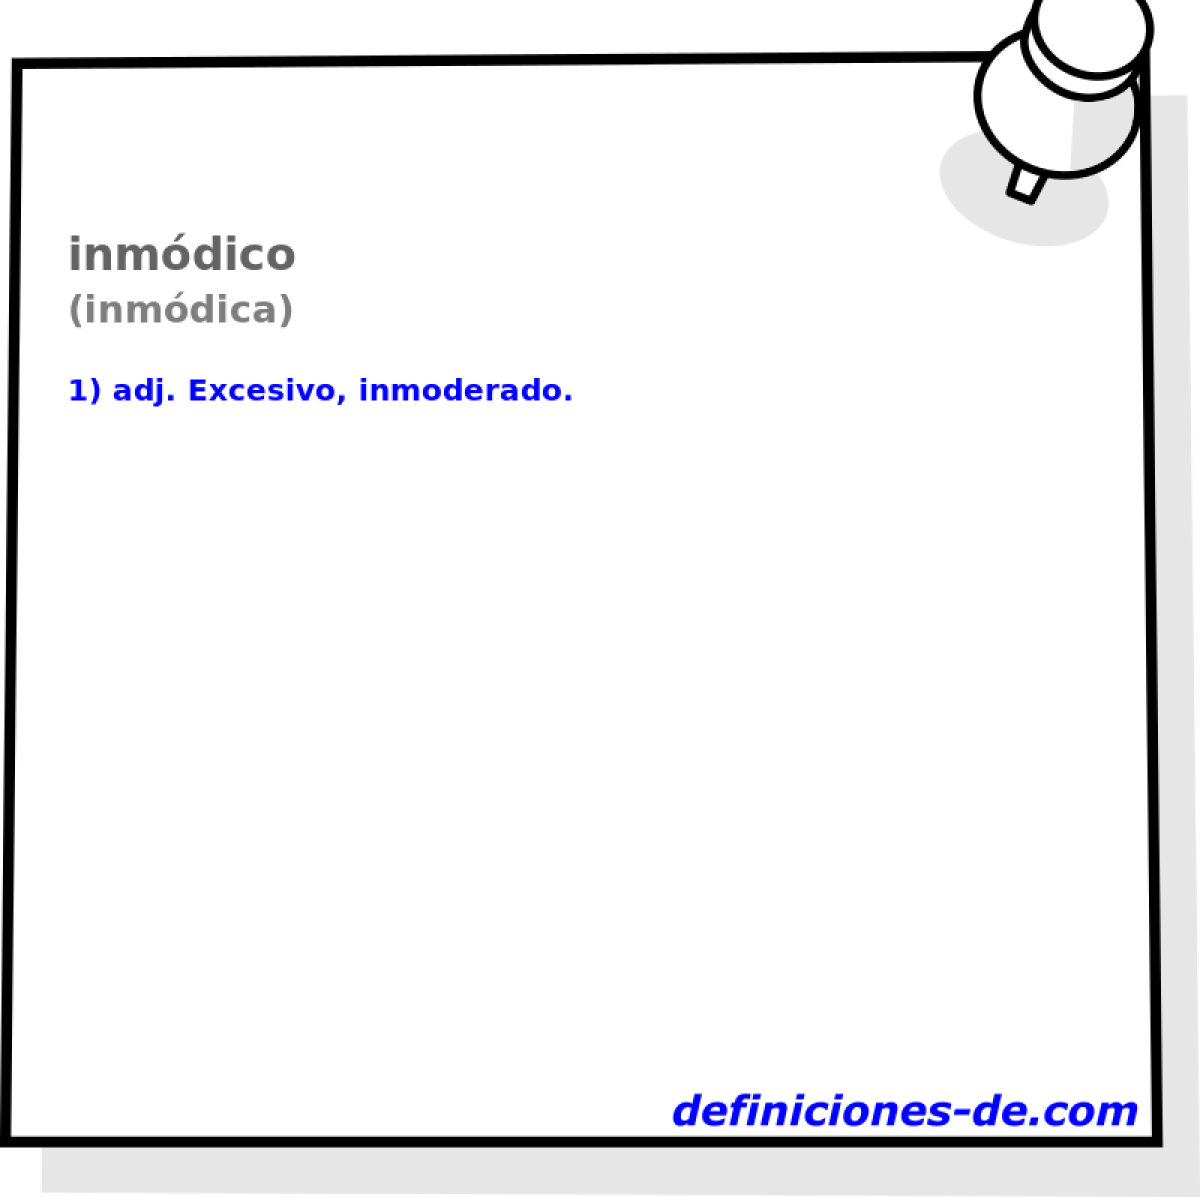 inmdico (inmdica)